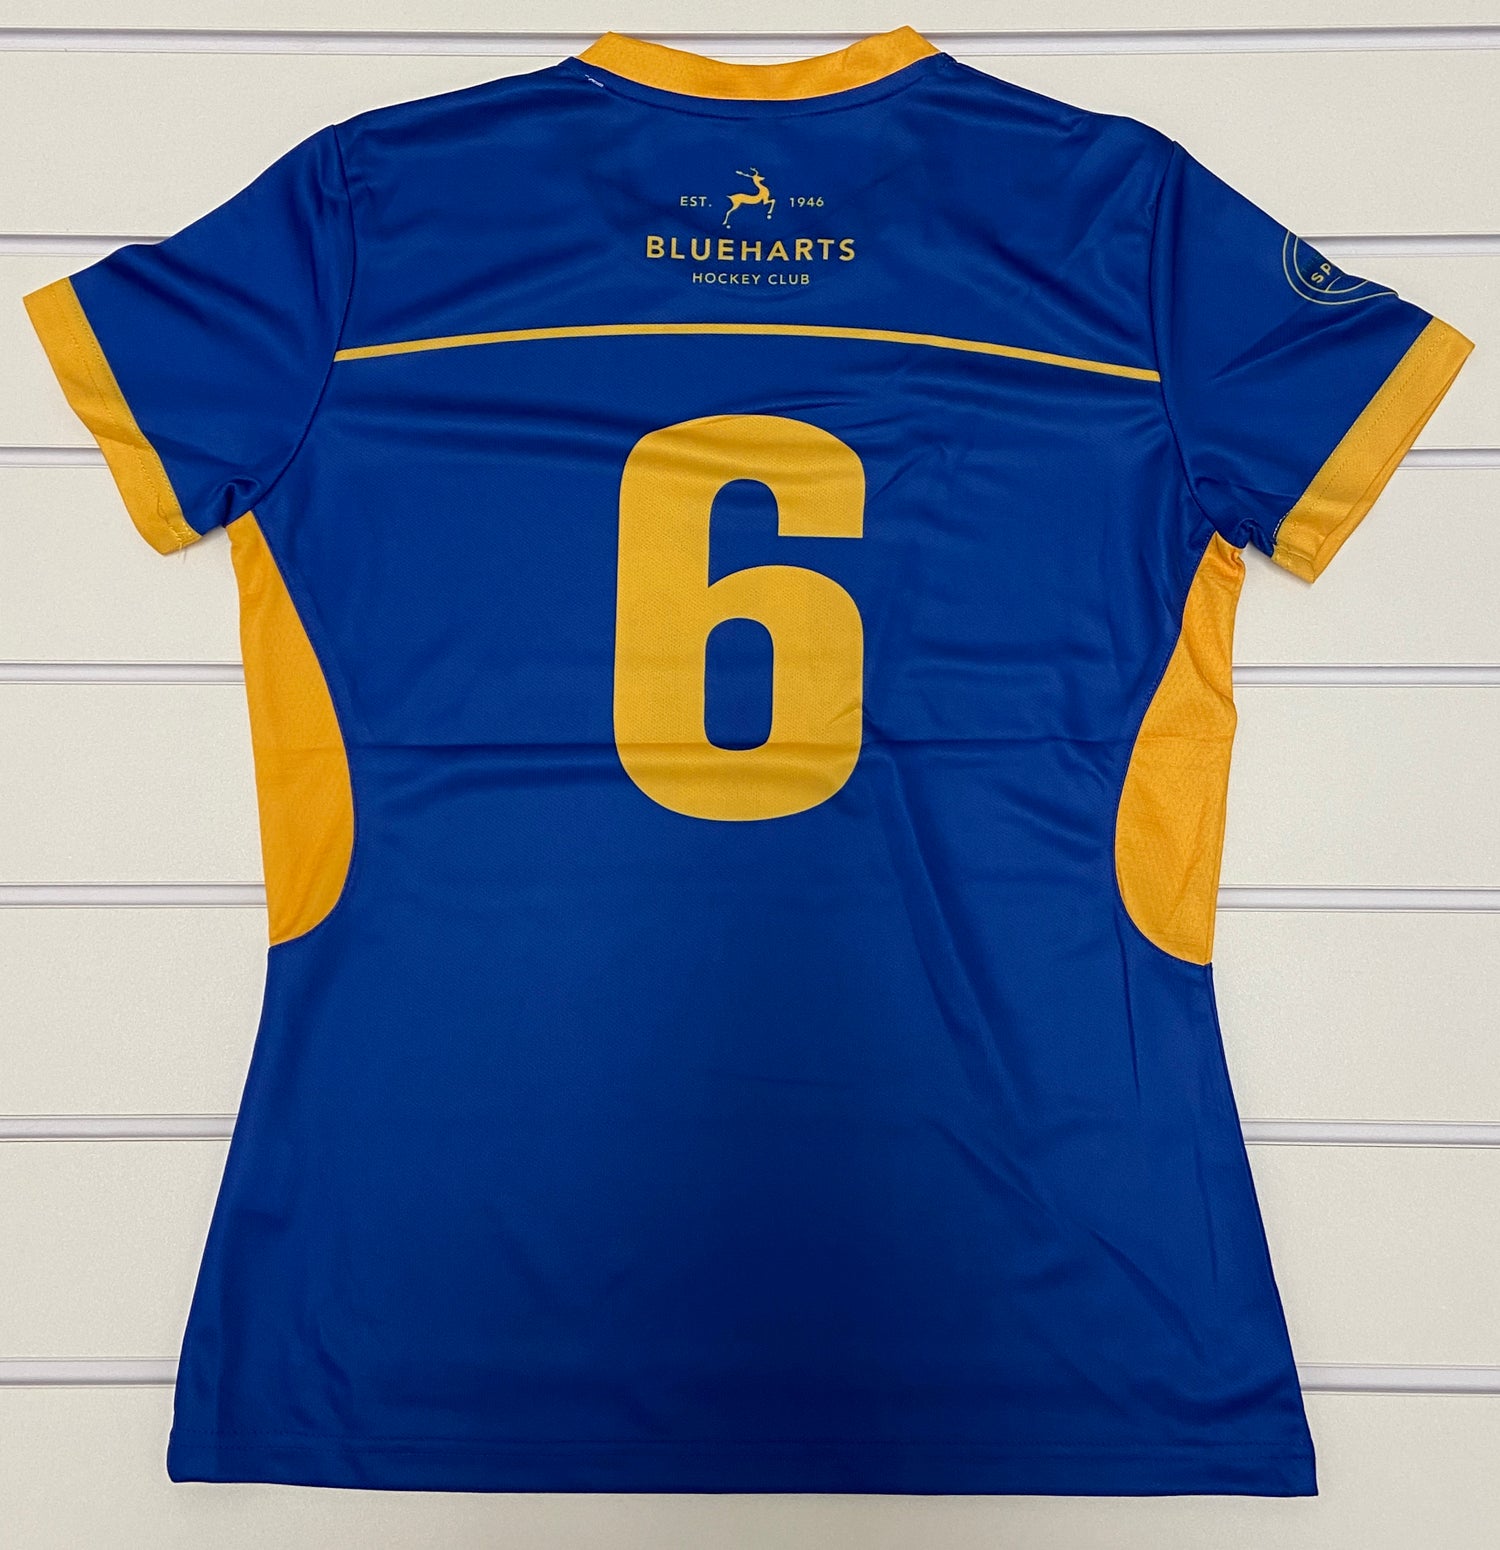 Blueharts Women's Home Playing Shirt (Large, size 14-16)